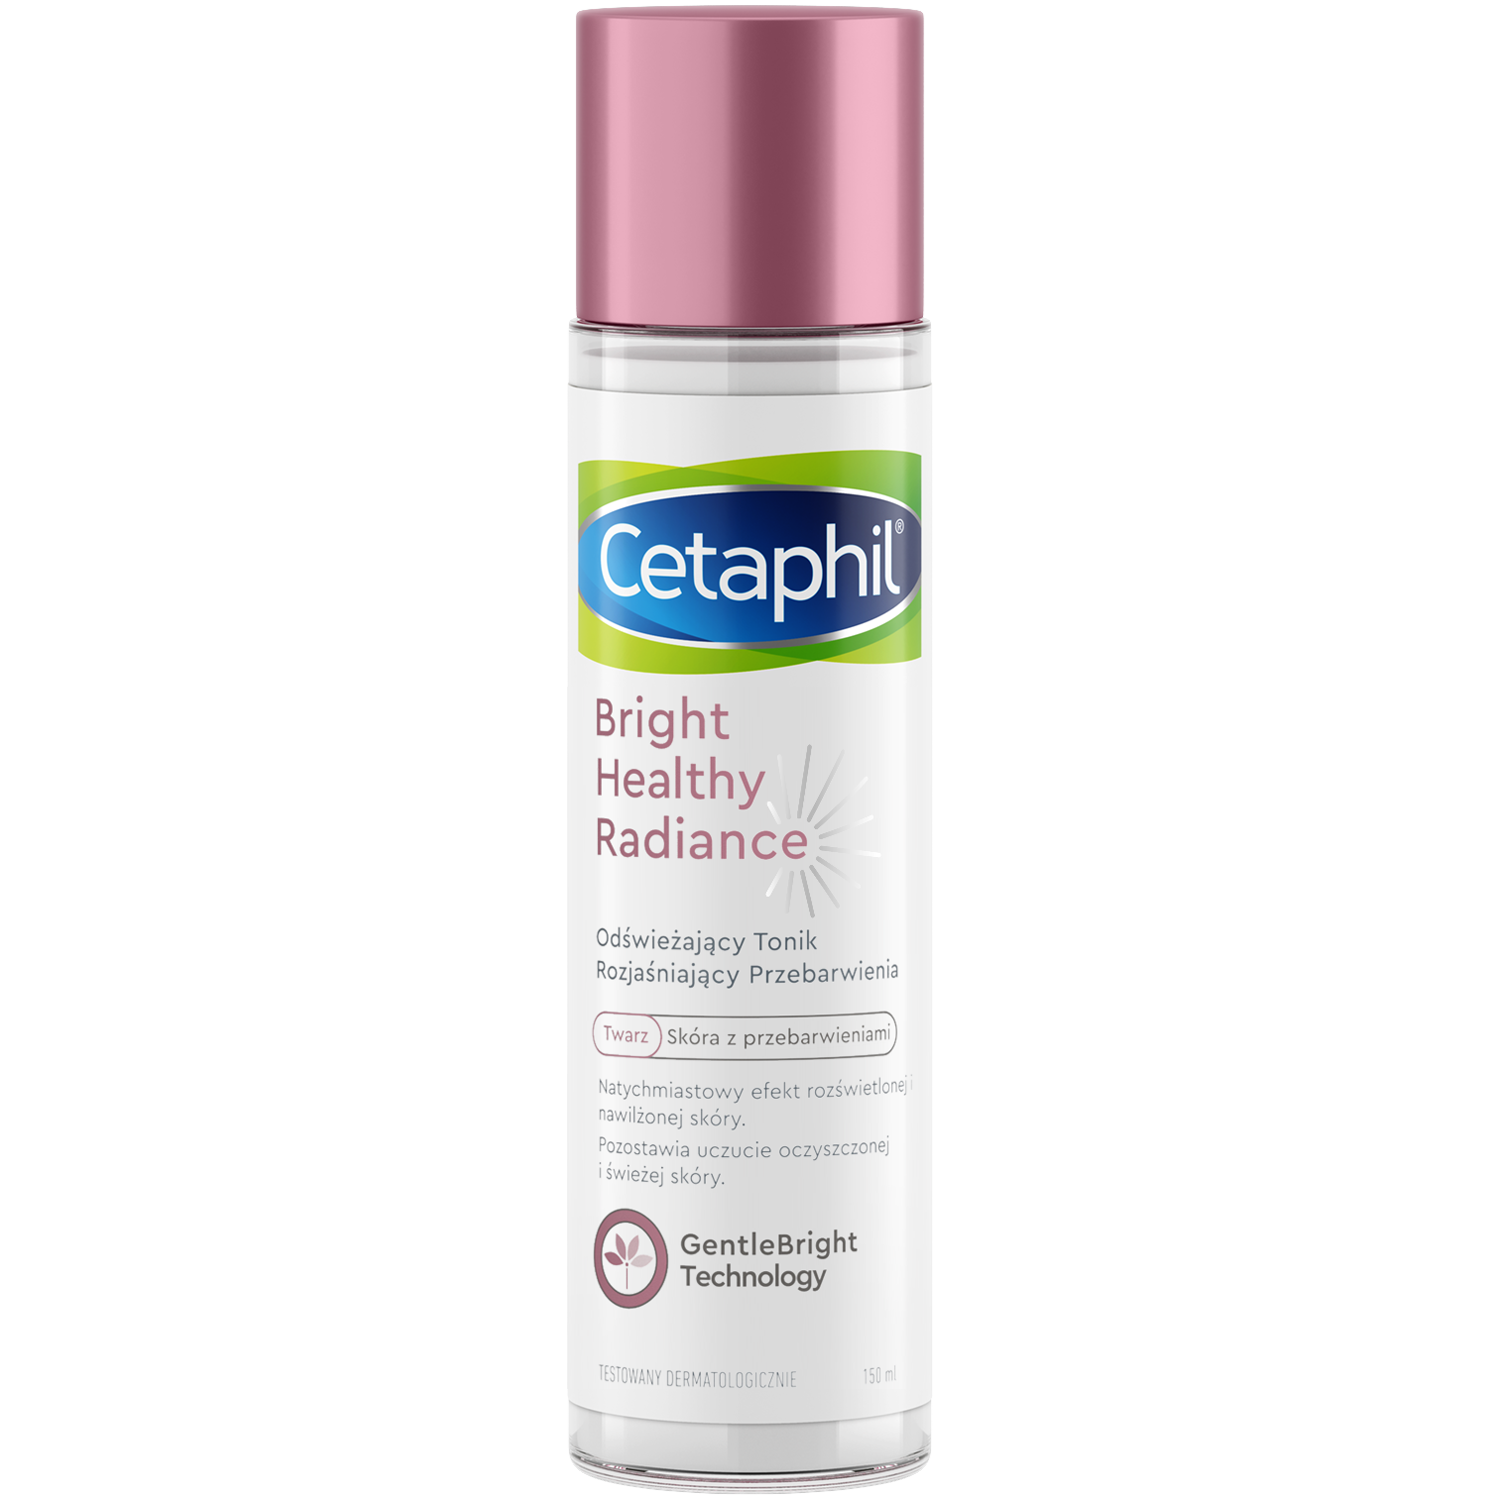 Cetaphil Bright Healthy Radiance освежающий тоник для лица, 150 мл cetaphil bright healthy radiance крем для лица на ночь 50 г